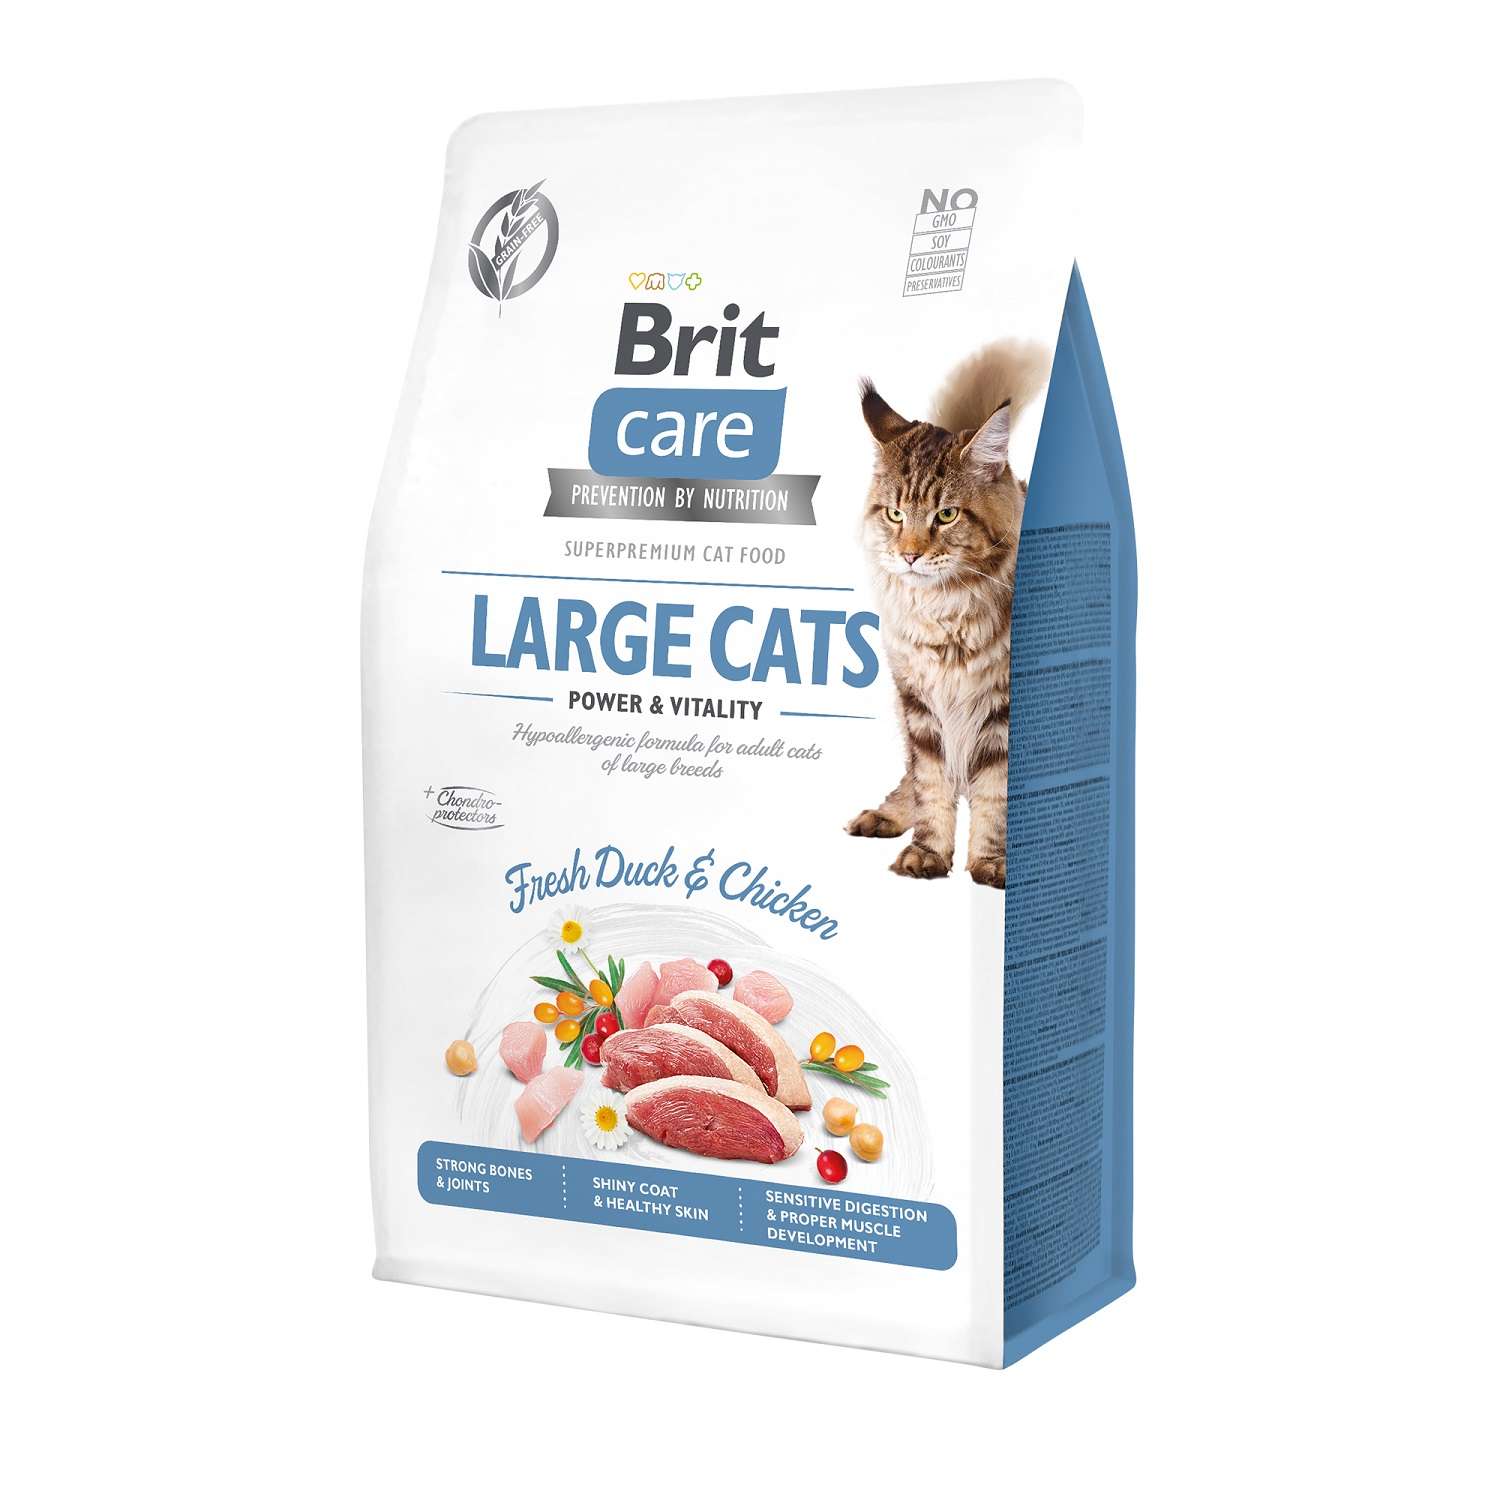 Корм для кошек Brit 400г Care GF Large cats Power Vitality для крупных пород - фото 1